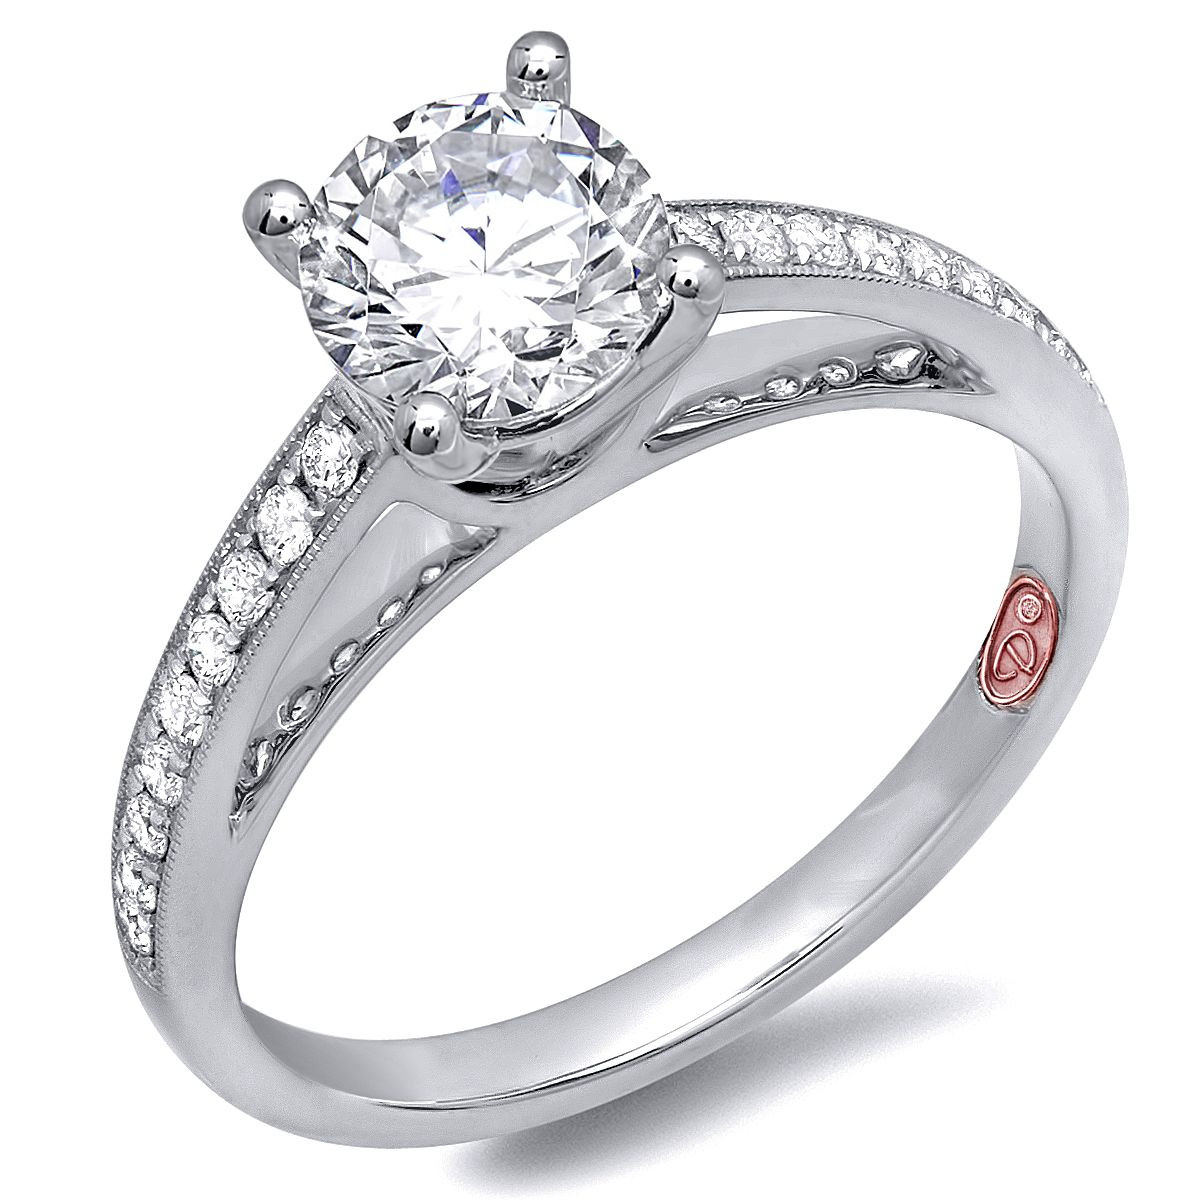 Designer Diamond Engagement Rings
 Designer Engagement Rings from DemarcoJewelry